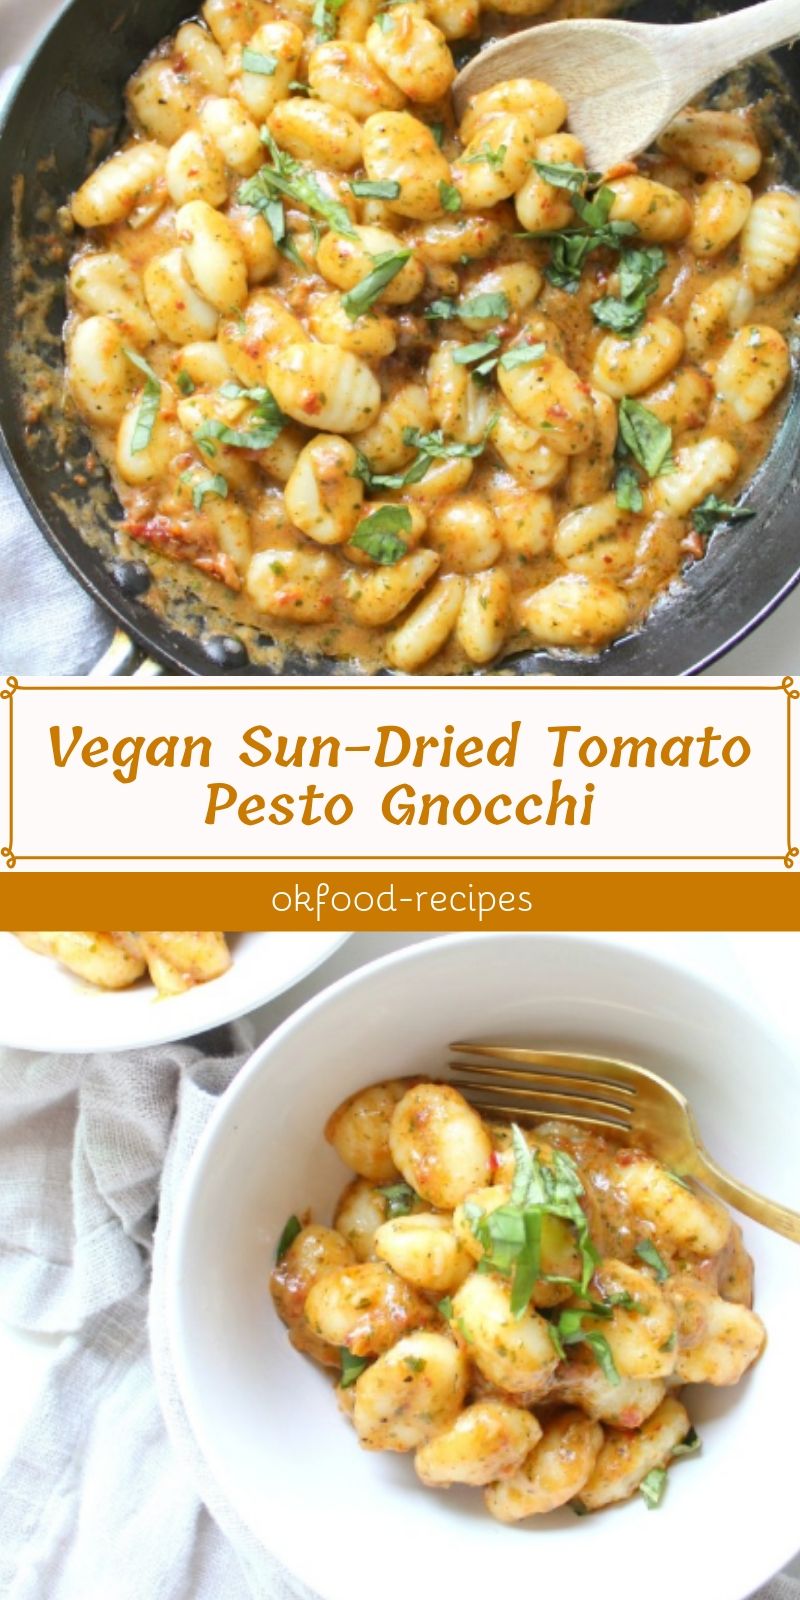 Vegan Sun-Dried Tomato Pesto Gnocchi